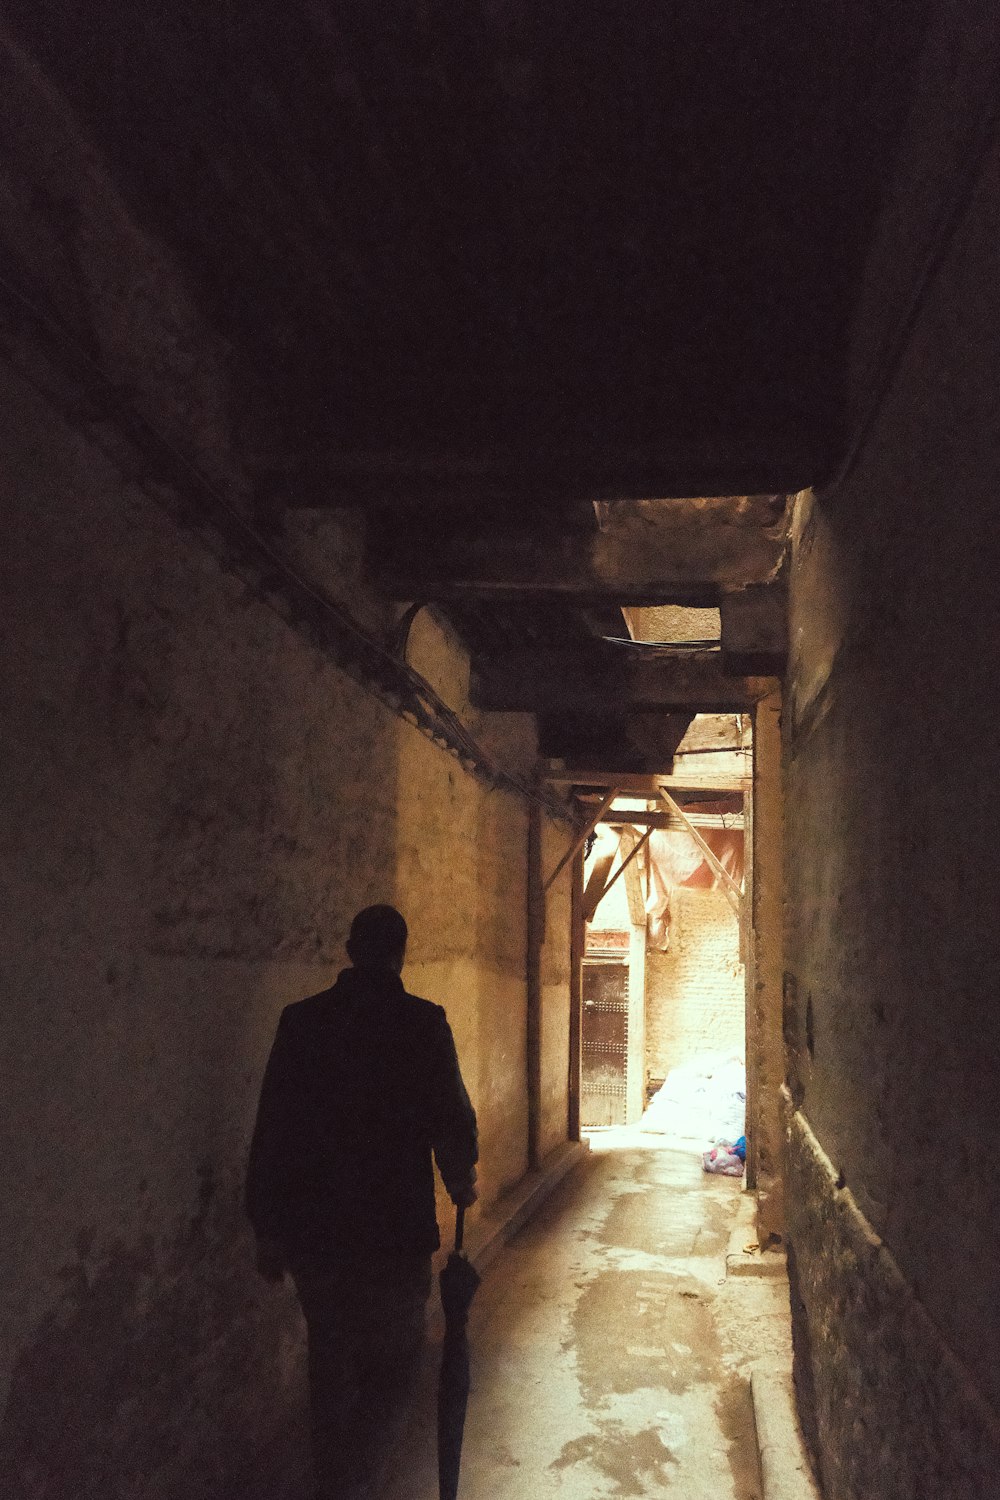 a man walking down a dark alley way